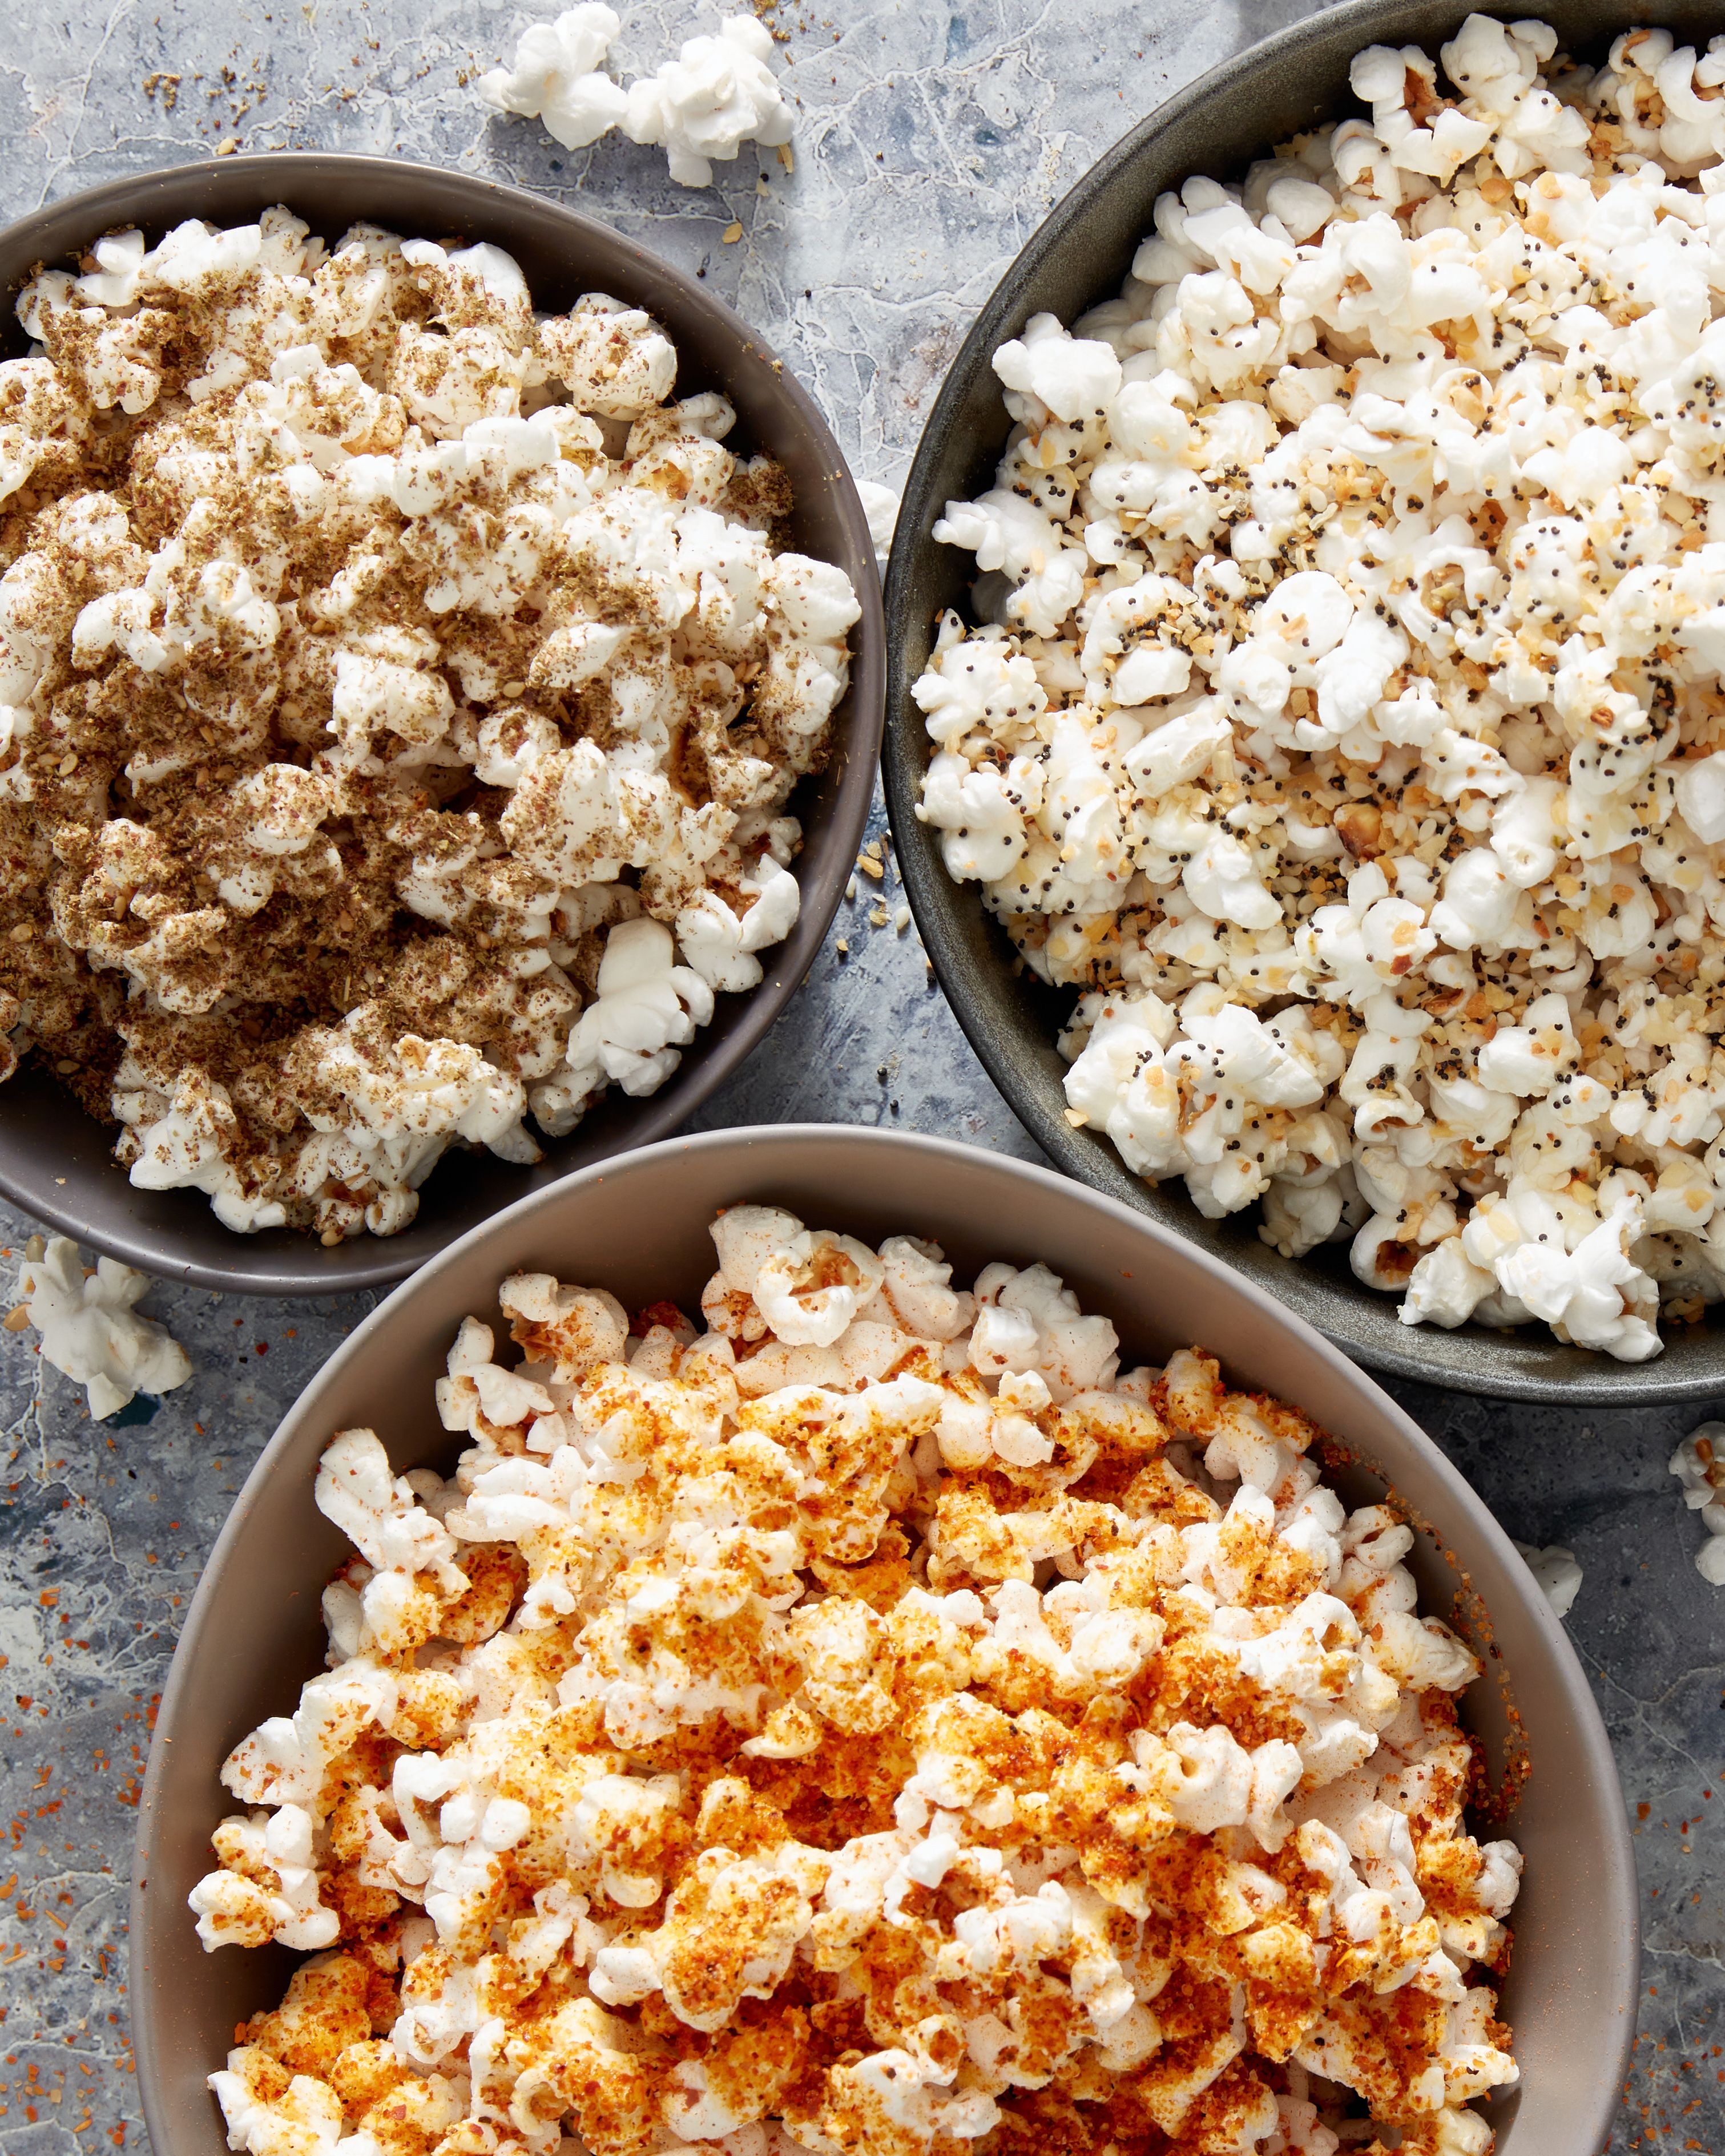 Popcorn and high fiber